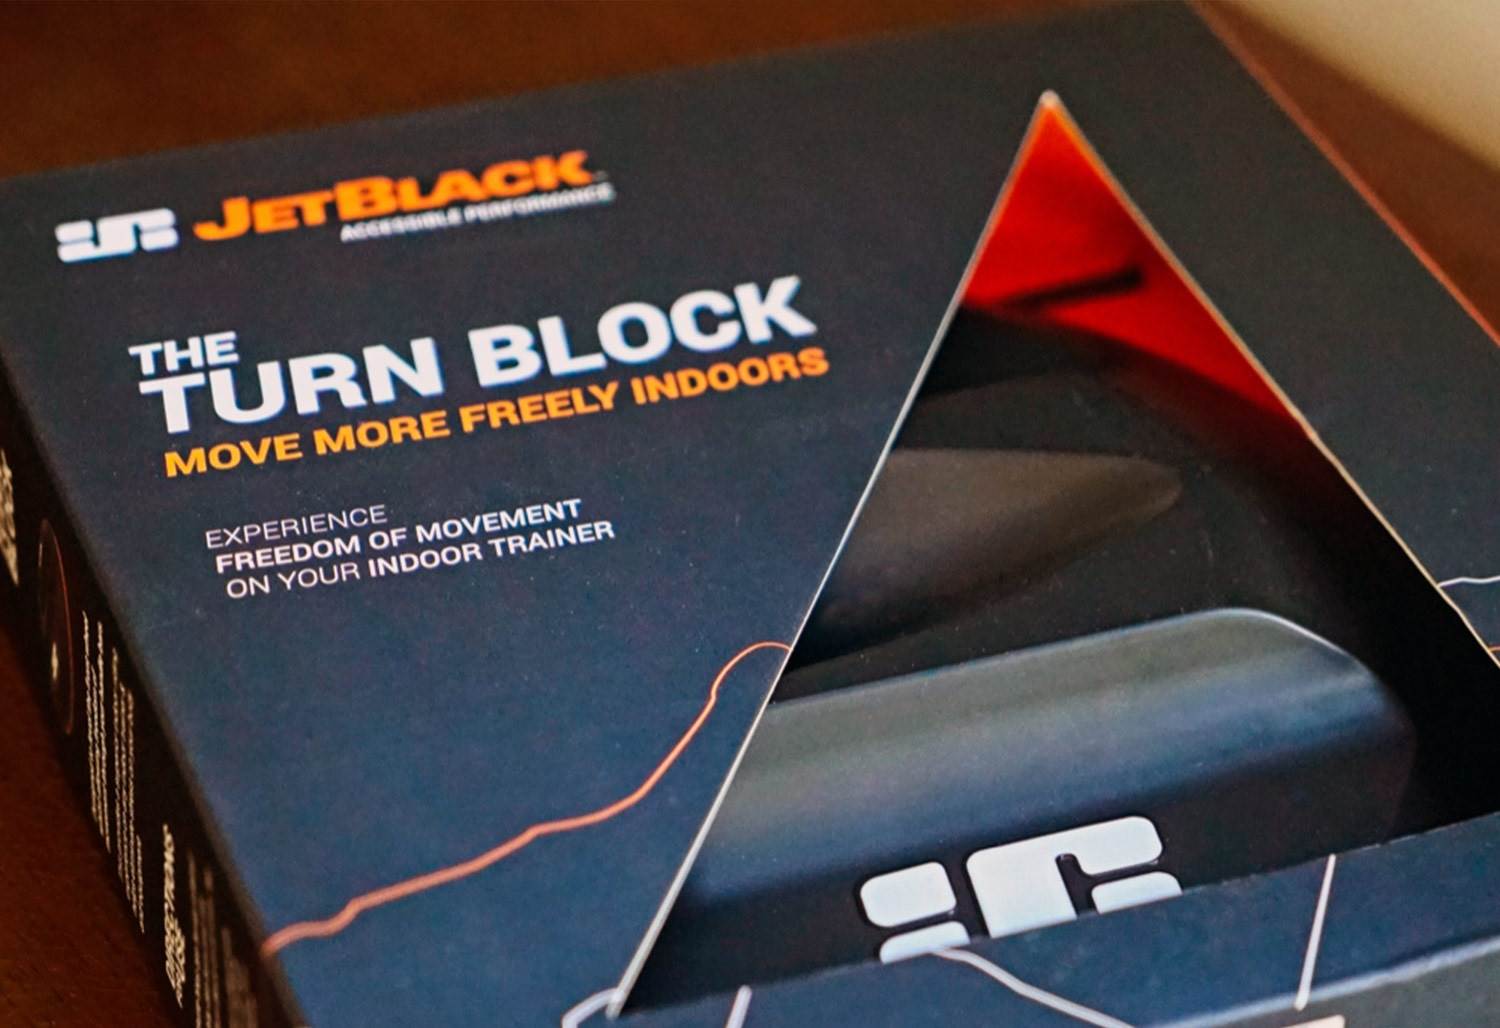 JetBlack Turn Block packaging design